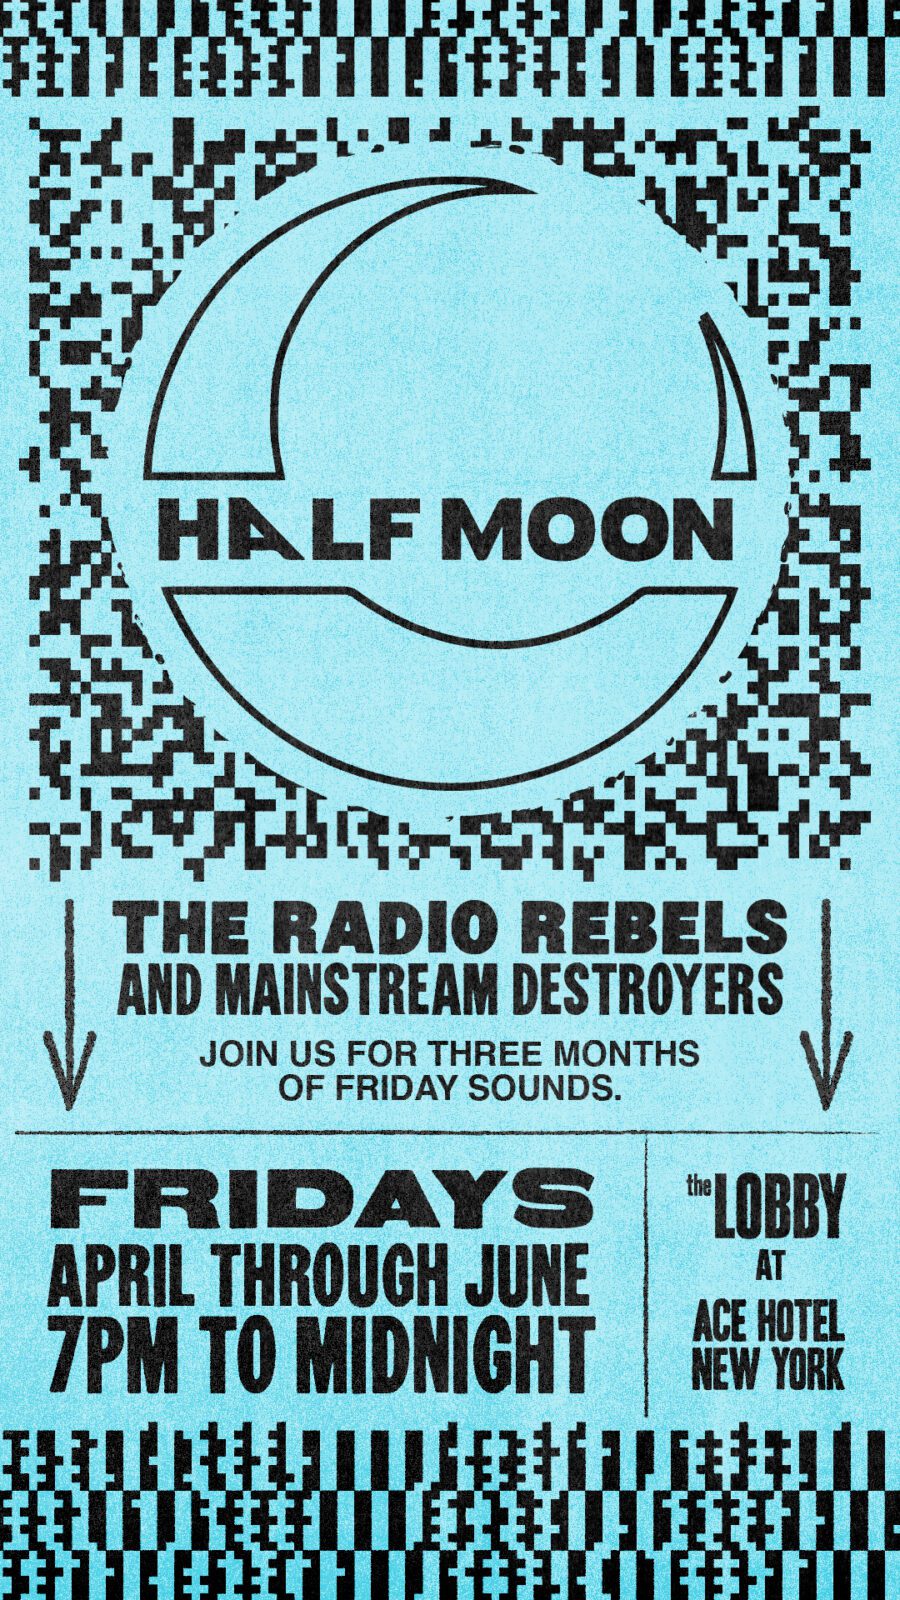 Half Moon - The Radio rebels